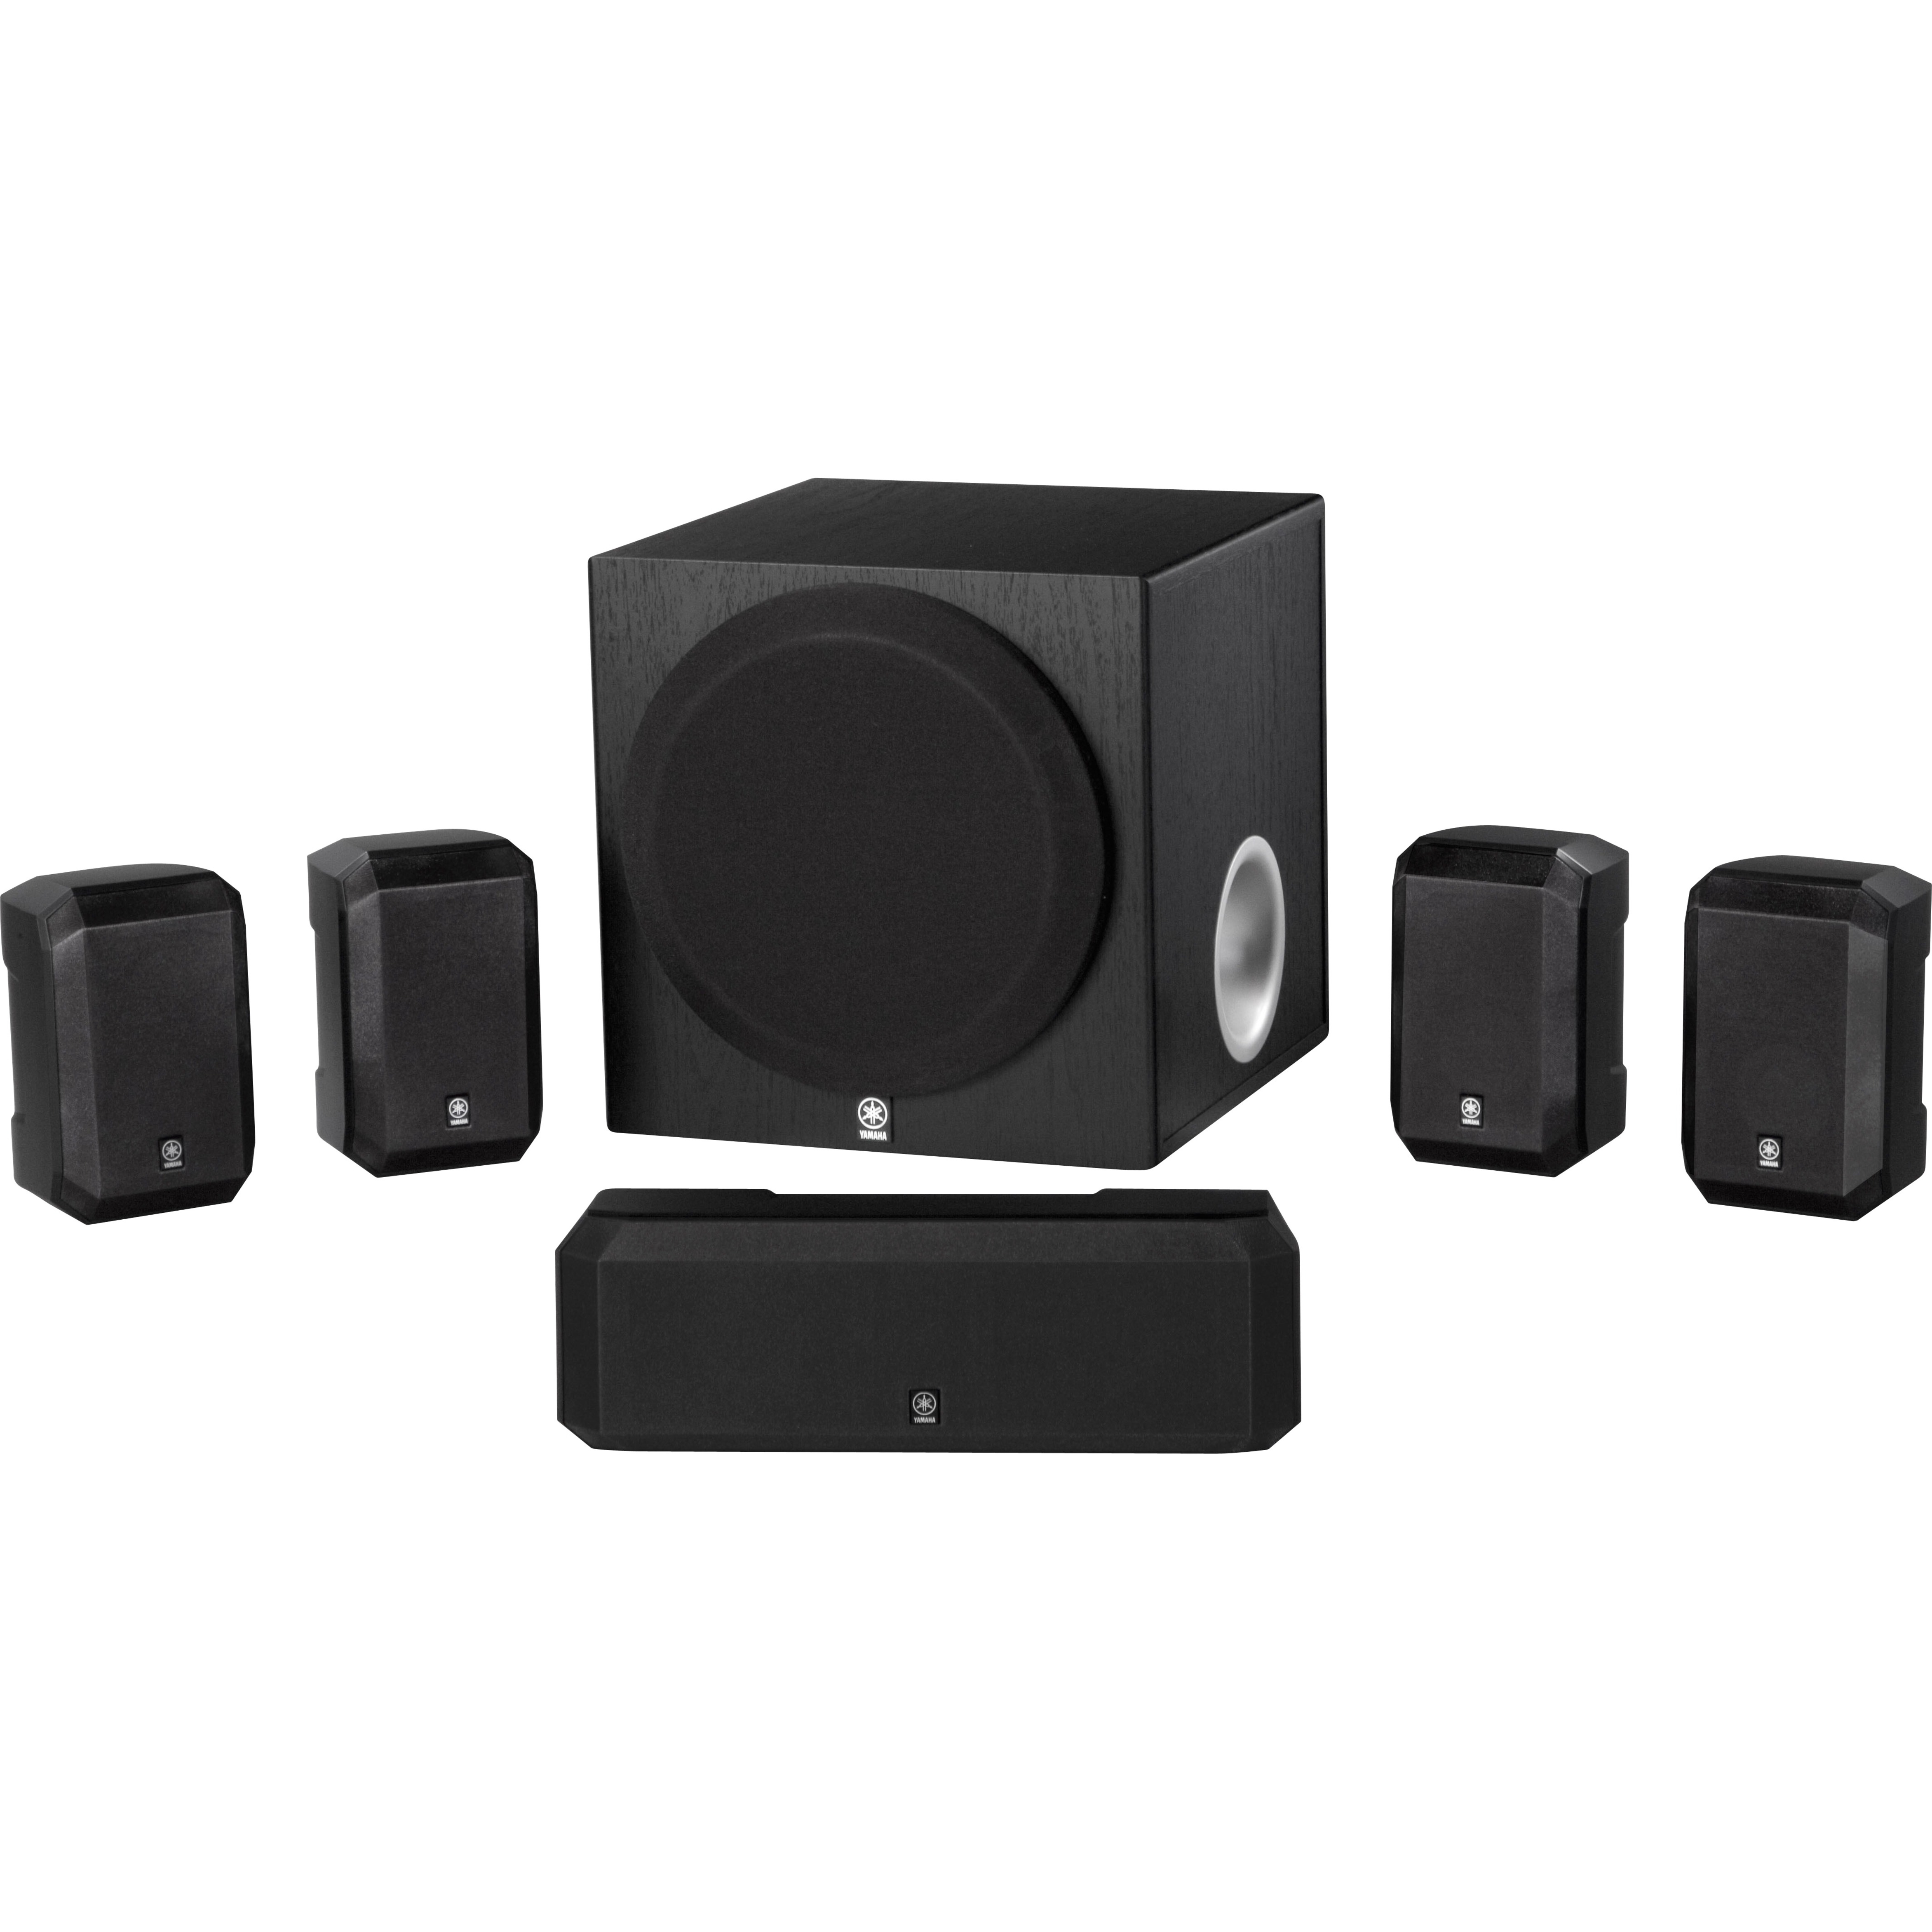 Yamaha NS-SP1800 5.1 Speaker System, 600 W RMS, Black - image 1 of 3